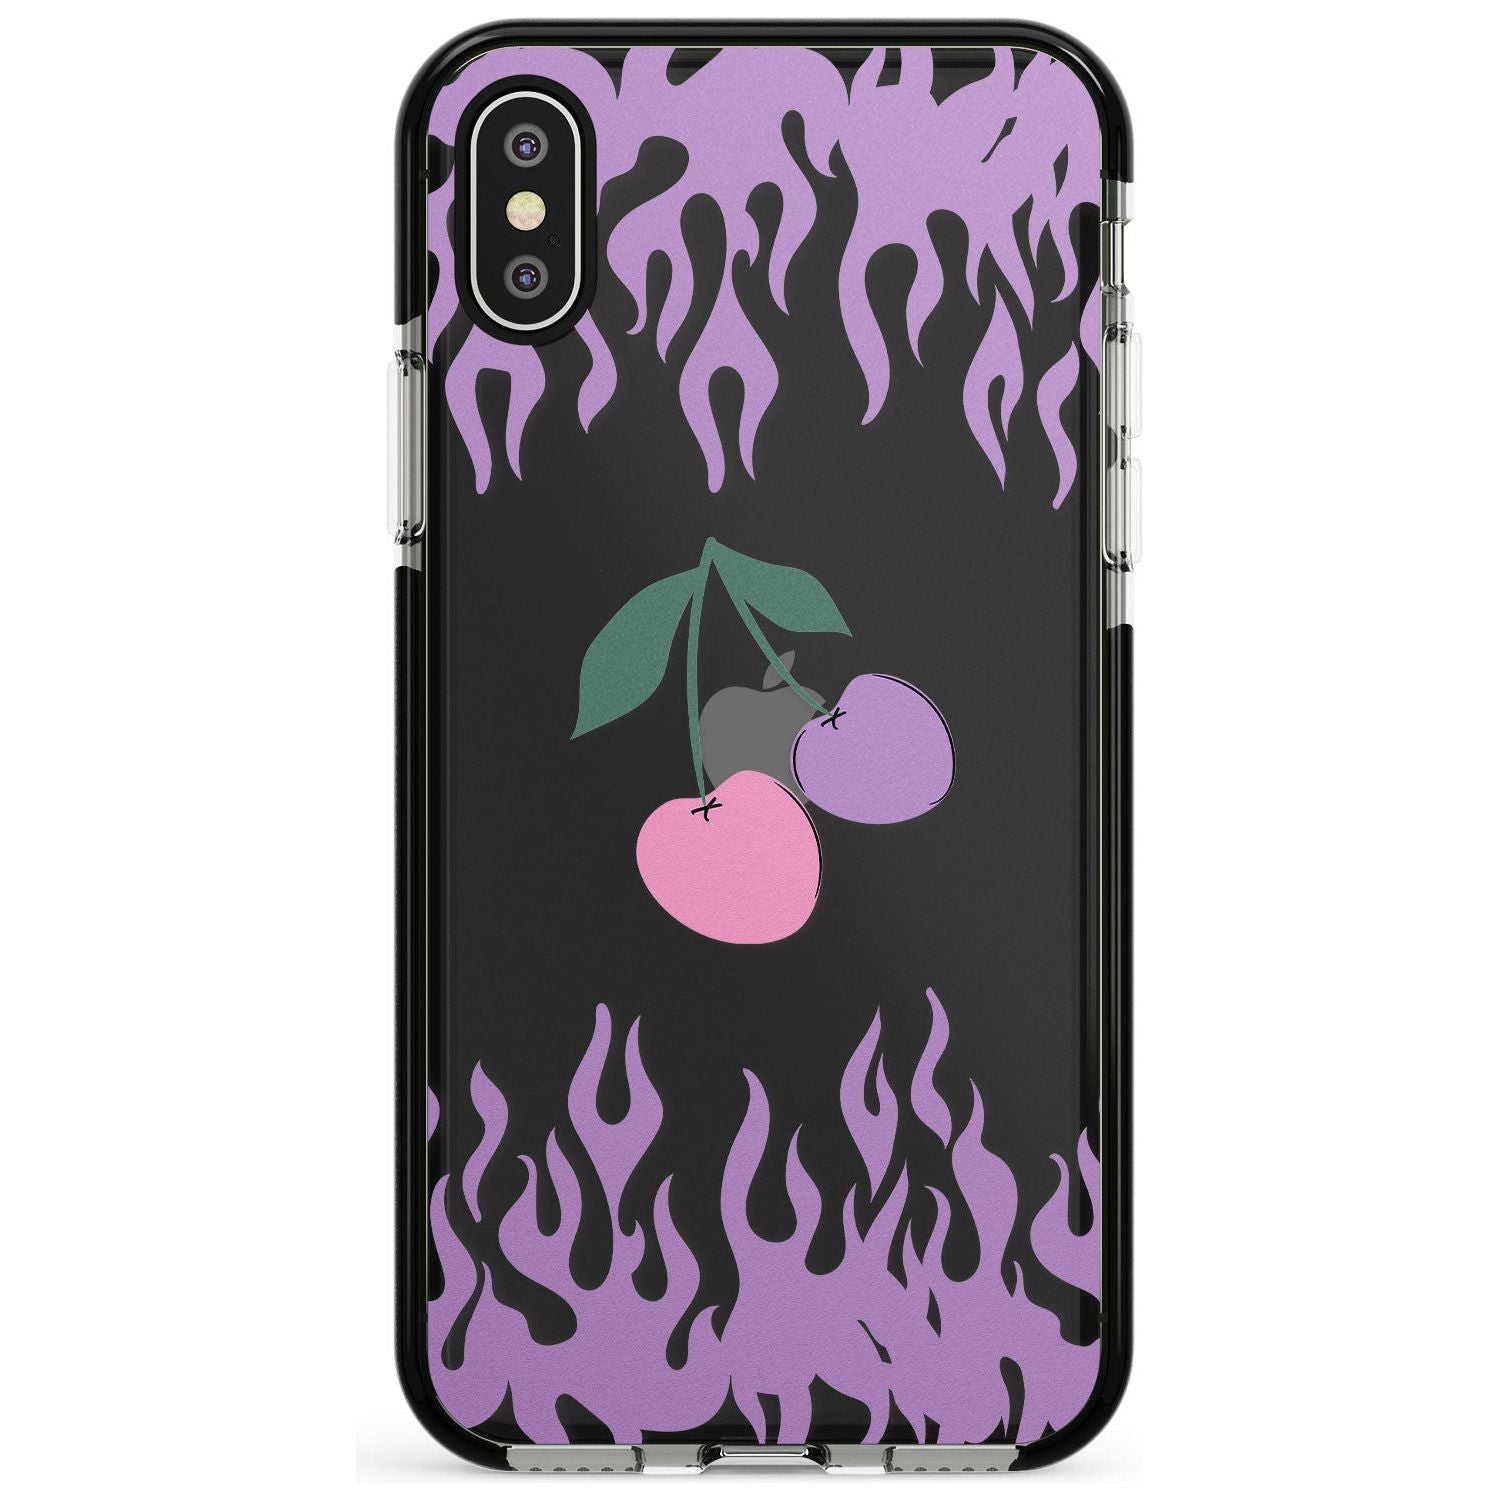 Cherries n' Flames Black Impact Phone Case for iPhone X XS Max XR